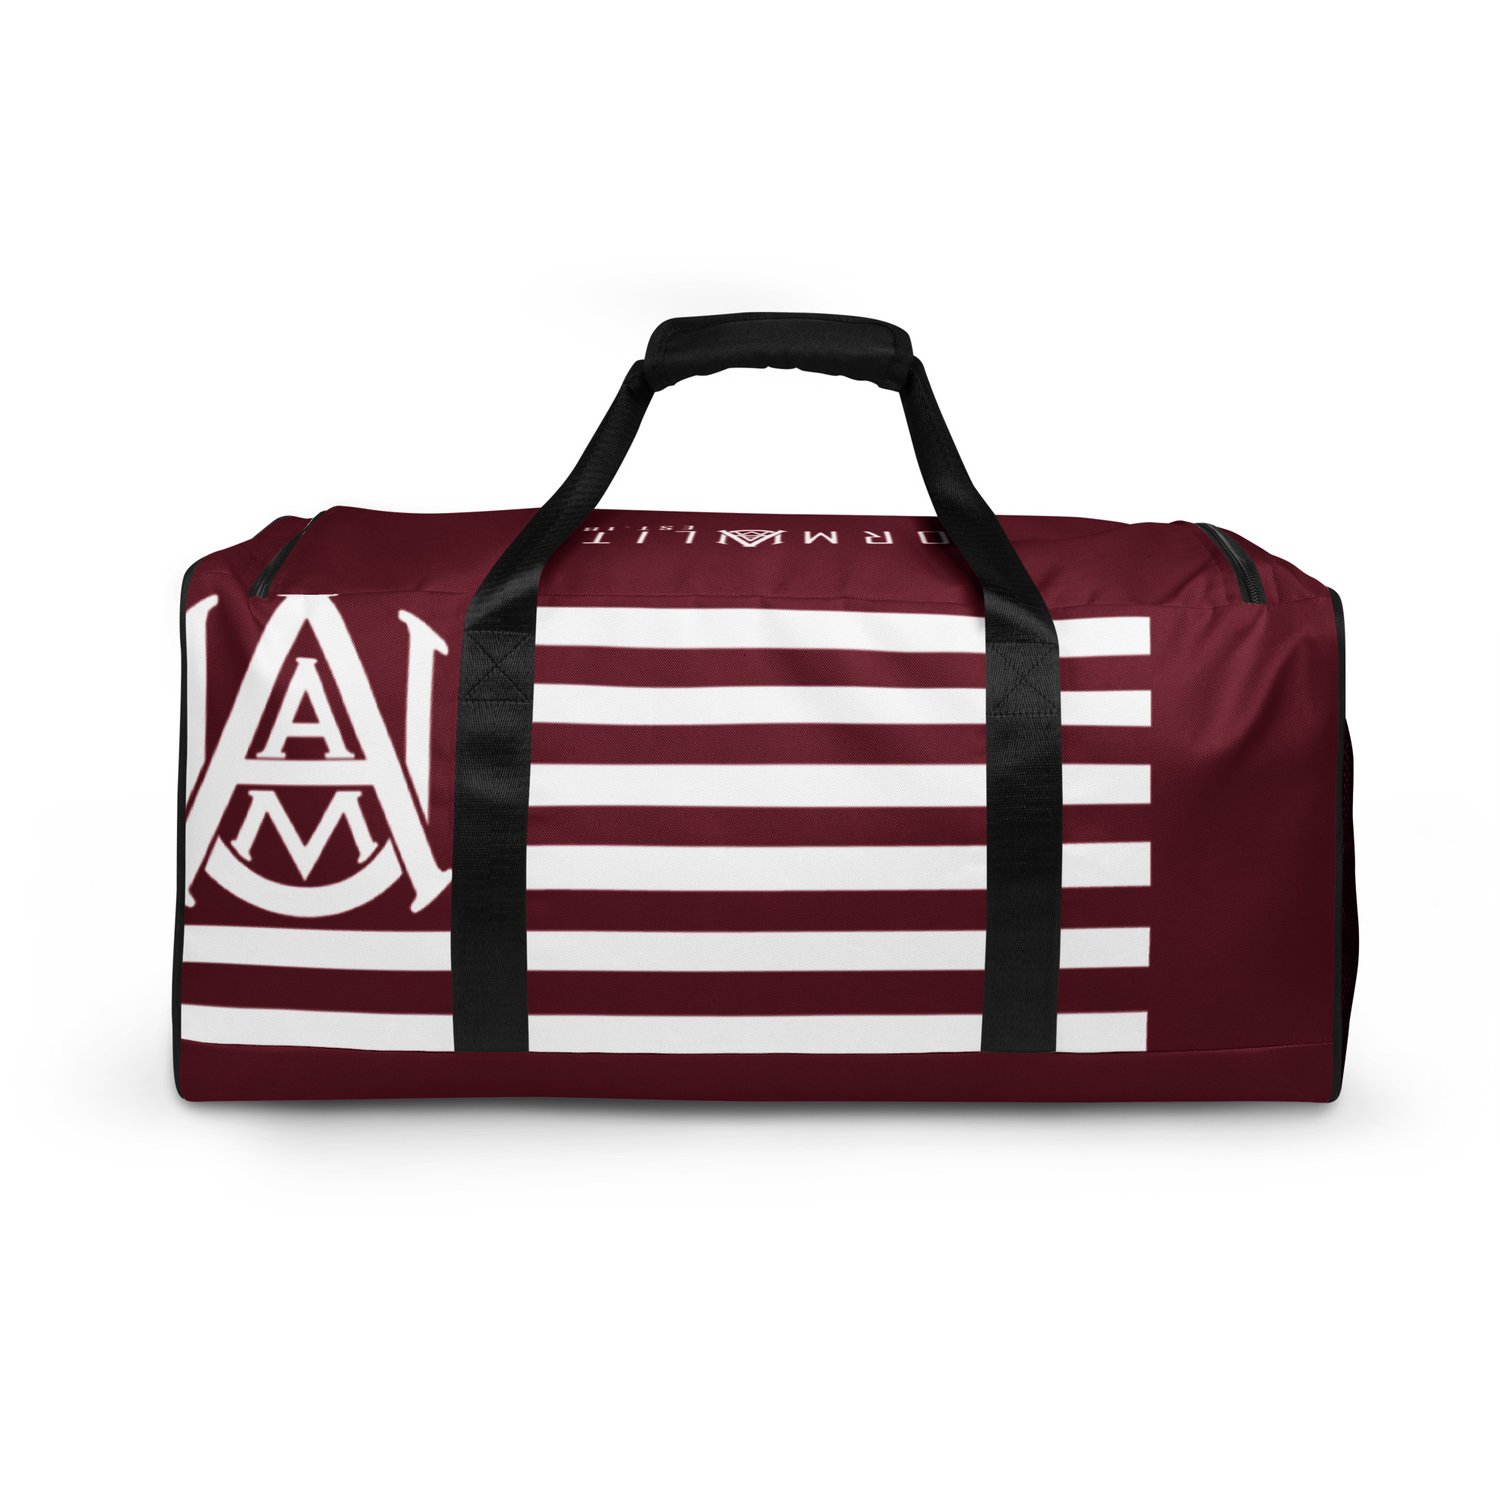 Image of AAMU Normalite Travel Bag